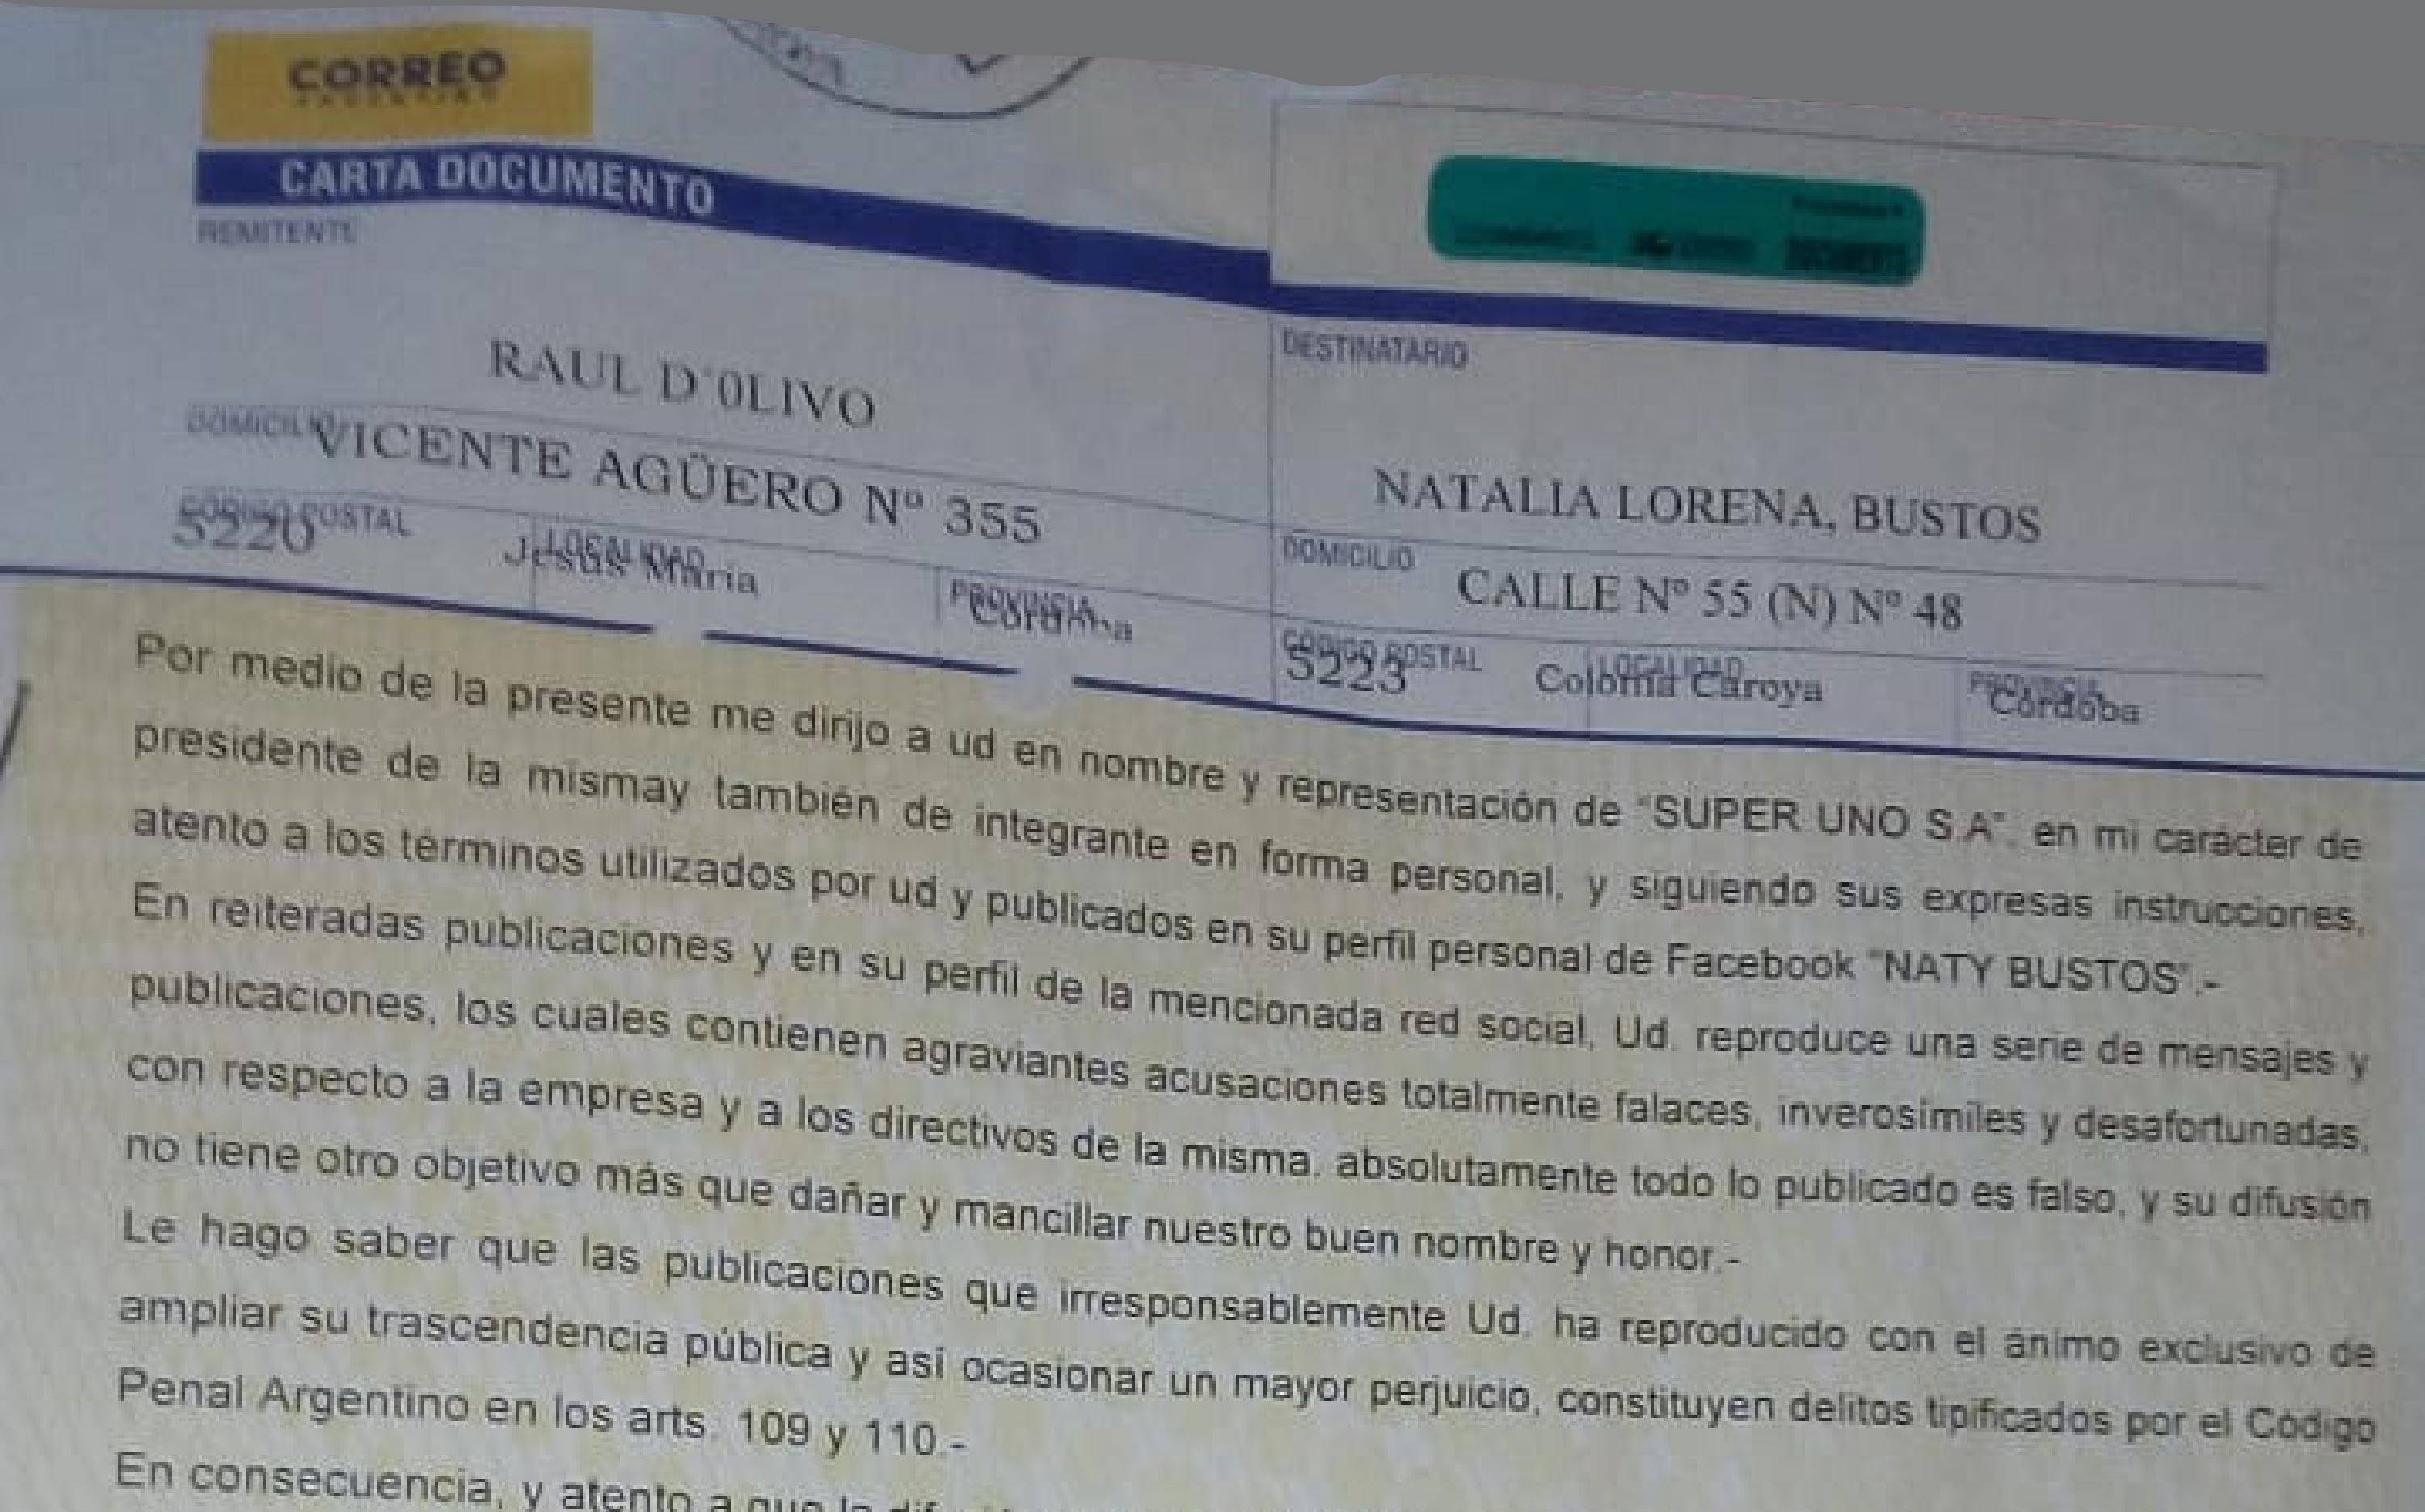 Raúl D'Olivo intimó judicialmente a una ex empleada de Super Uno | La Ronda